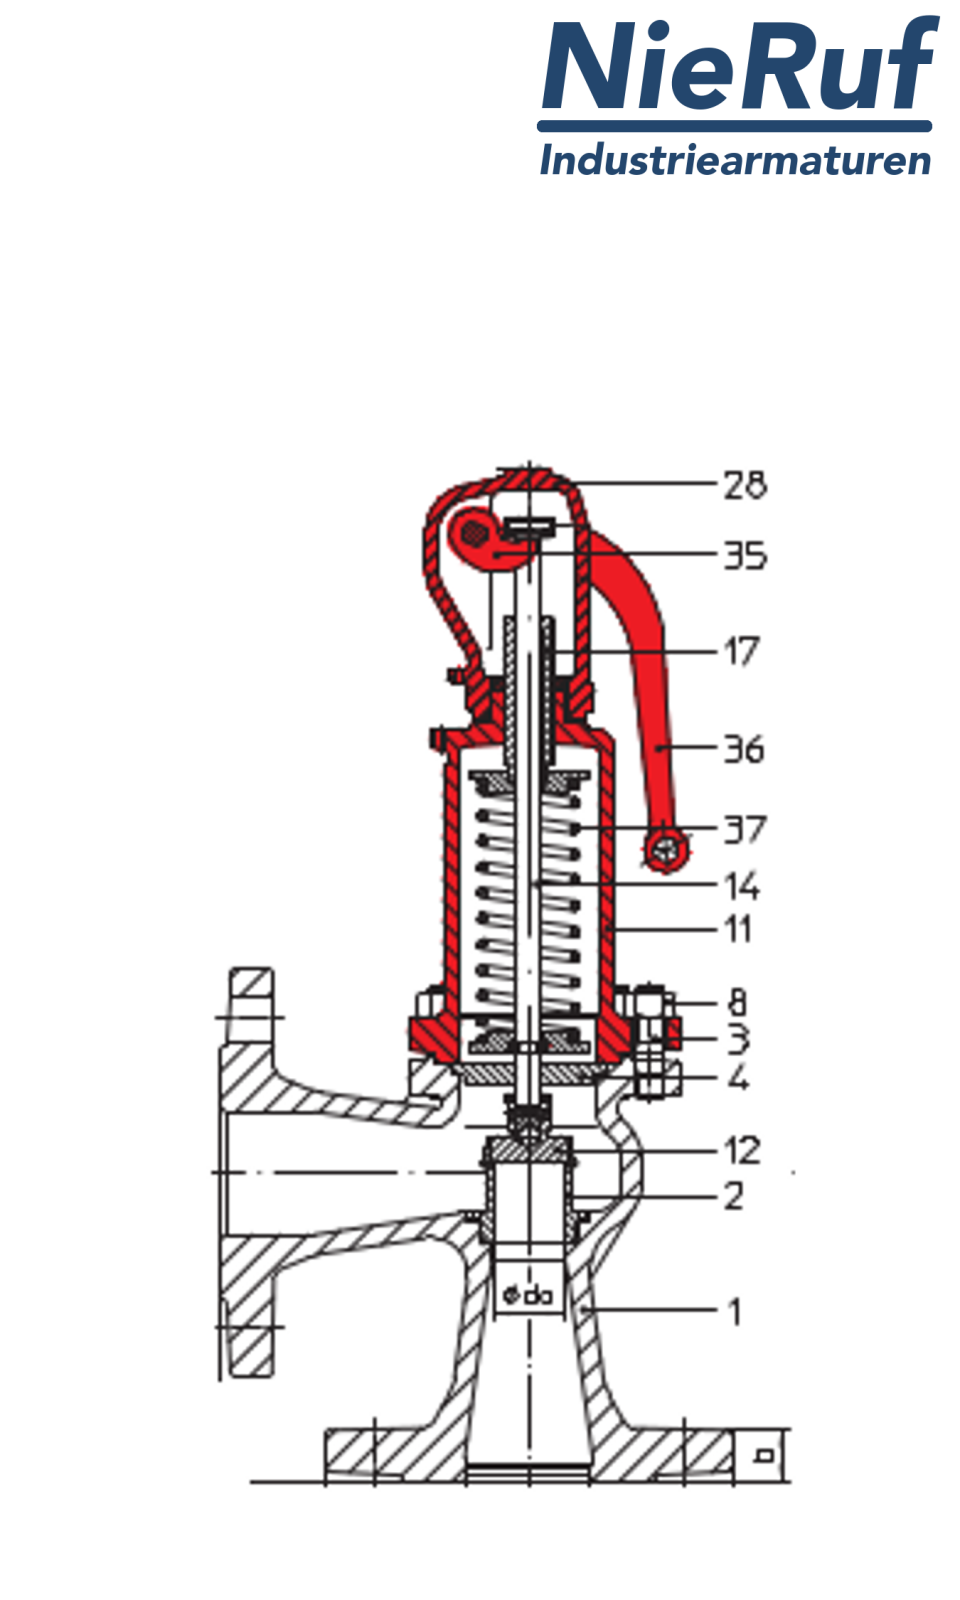 flange-safety valve DN65/DN65 SF01, cast iron EN-JL1040 FPM, with lever